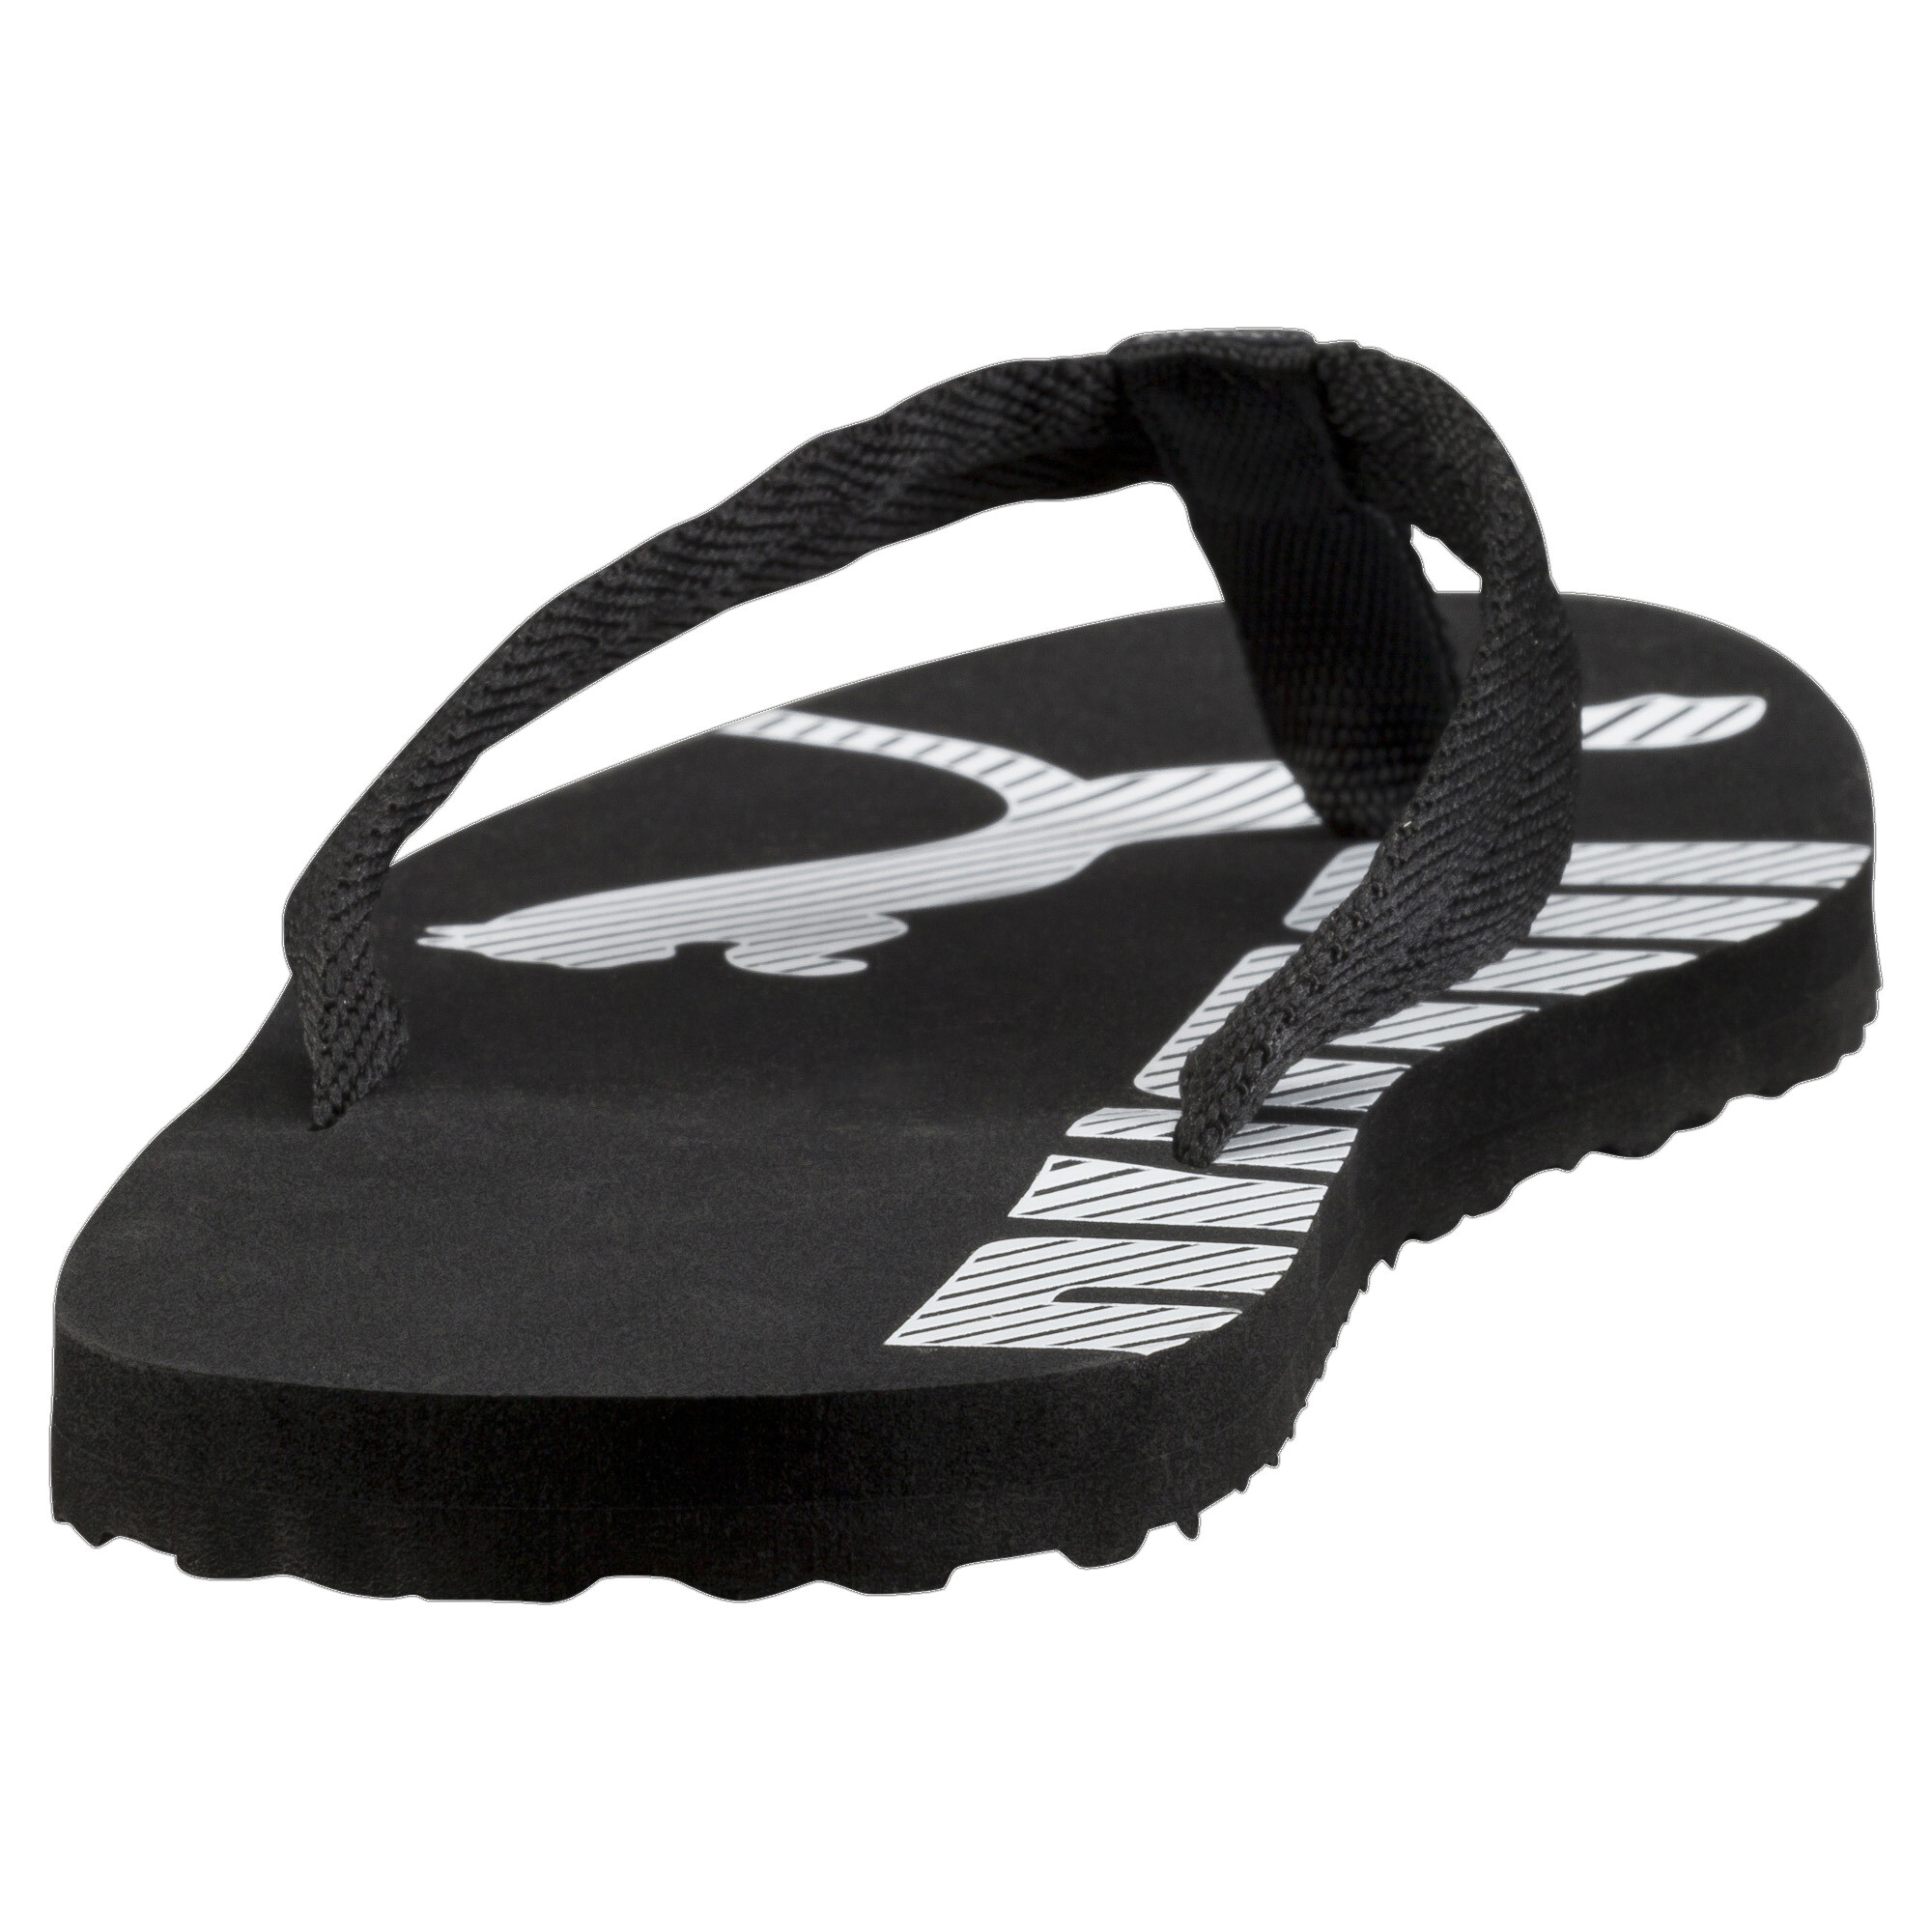 Men's PUMA Epic Flip V2 Sandals In Black, Size EU 39